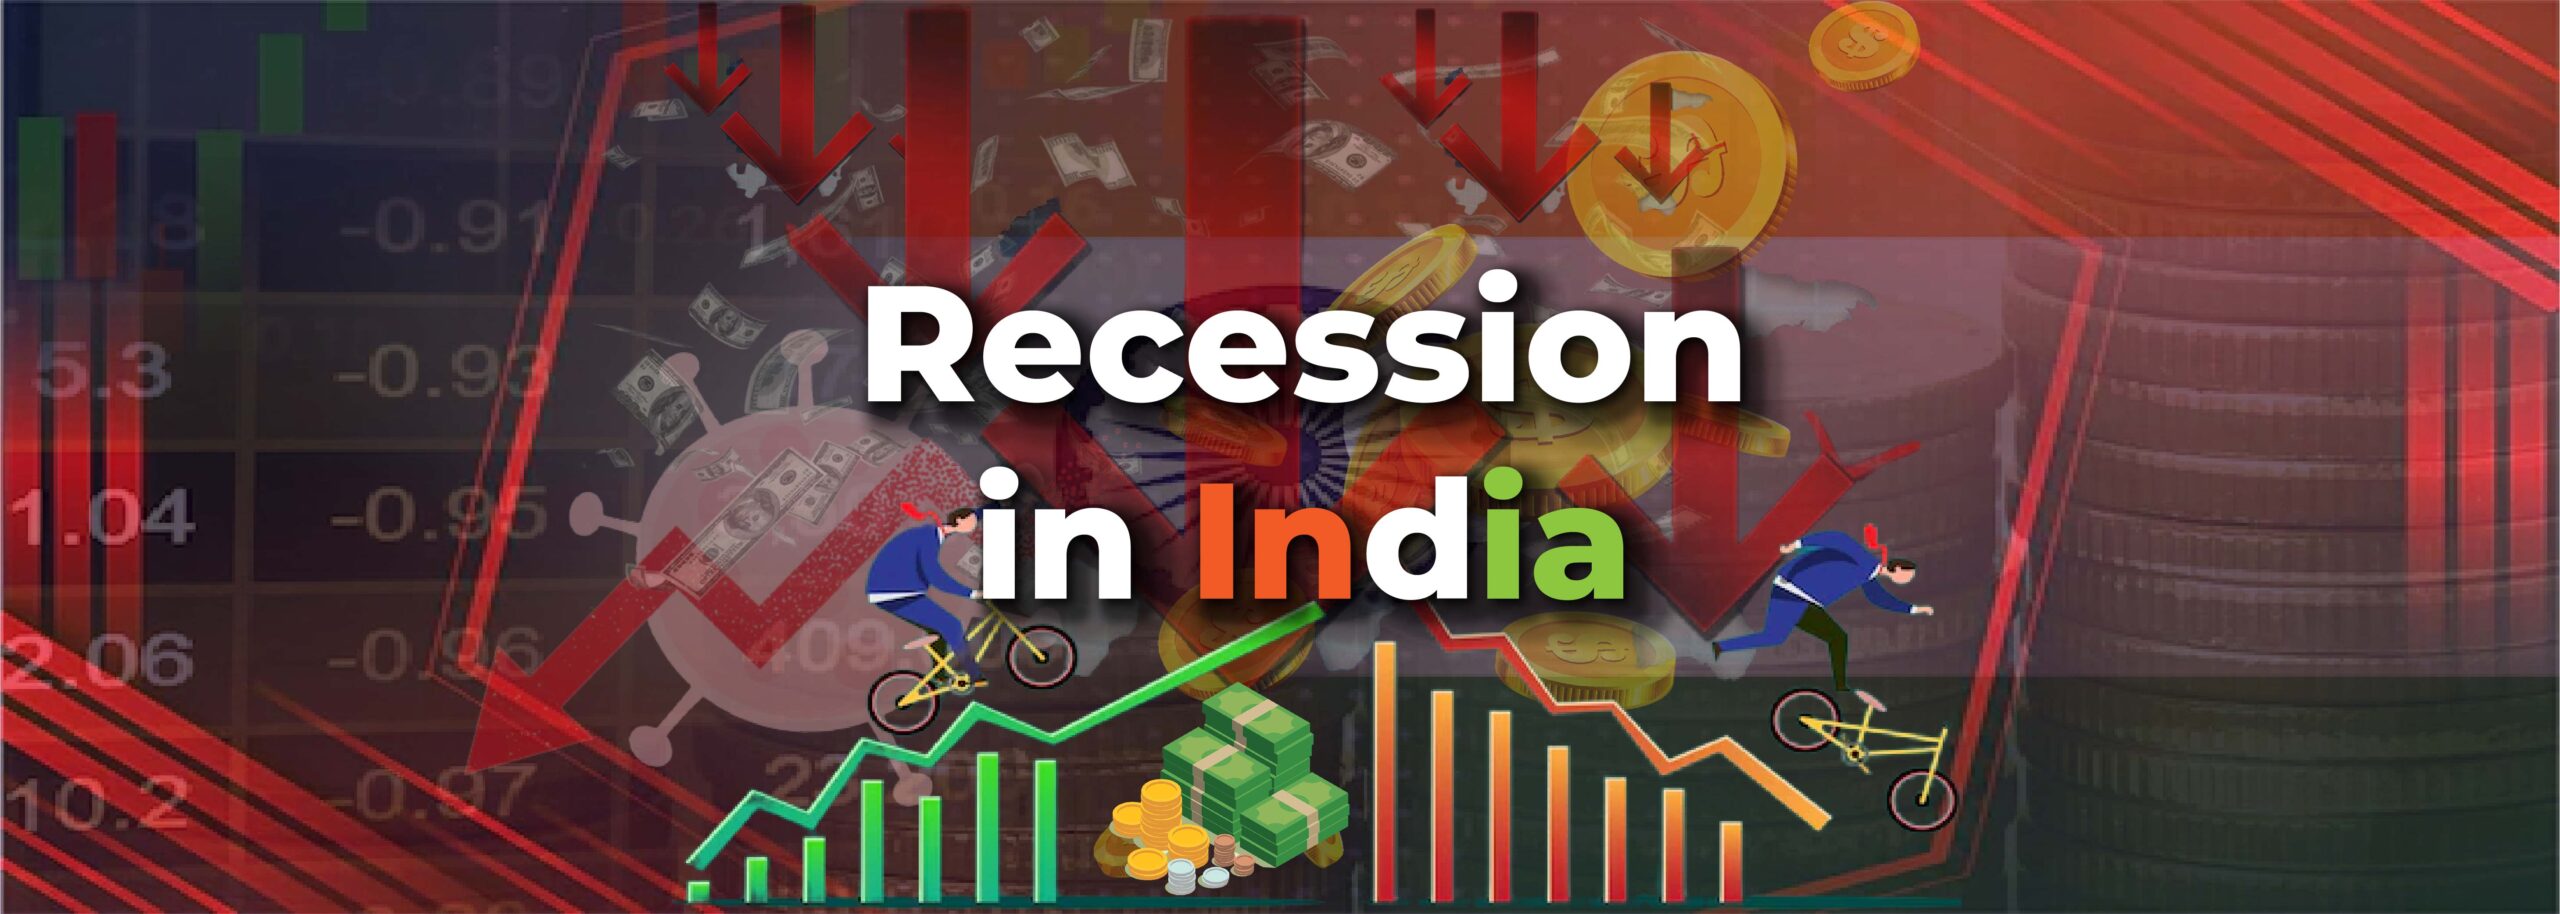 essay on recession in india